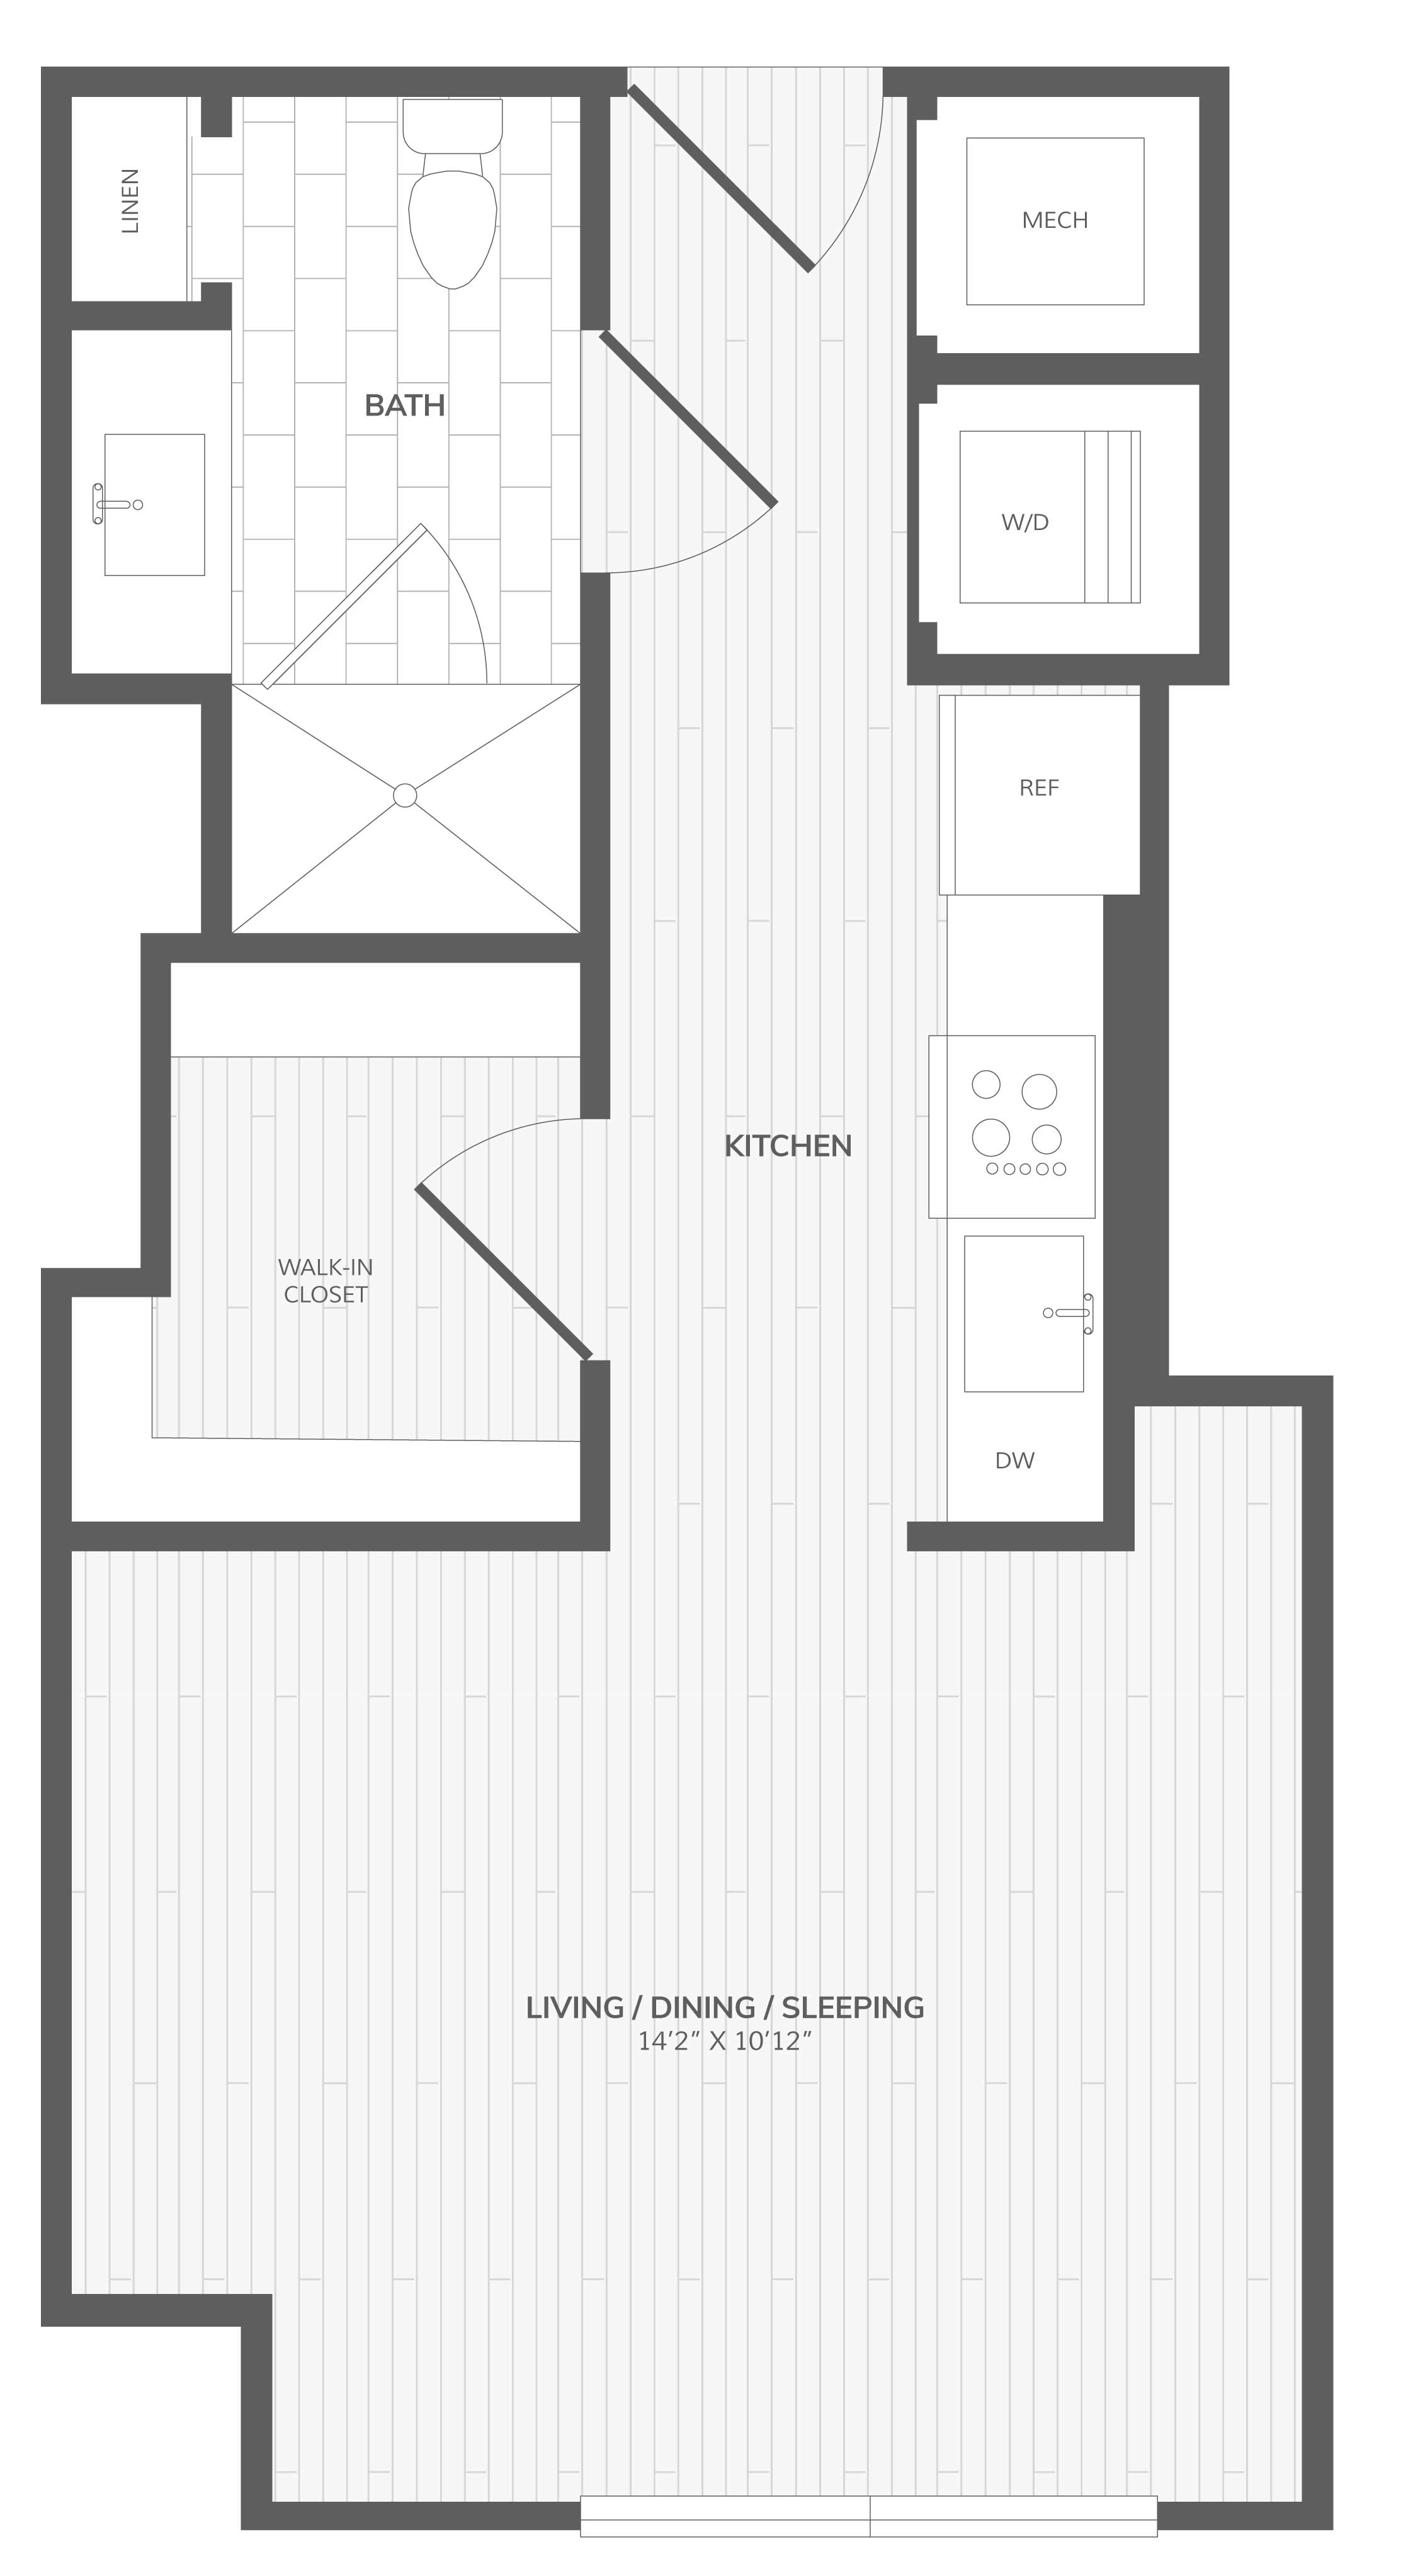 Floorplan Image of E-904